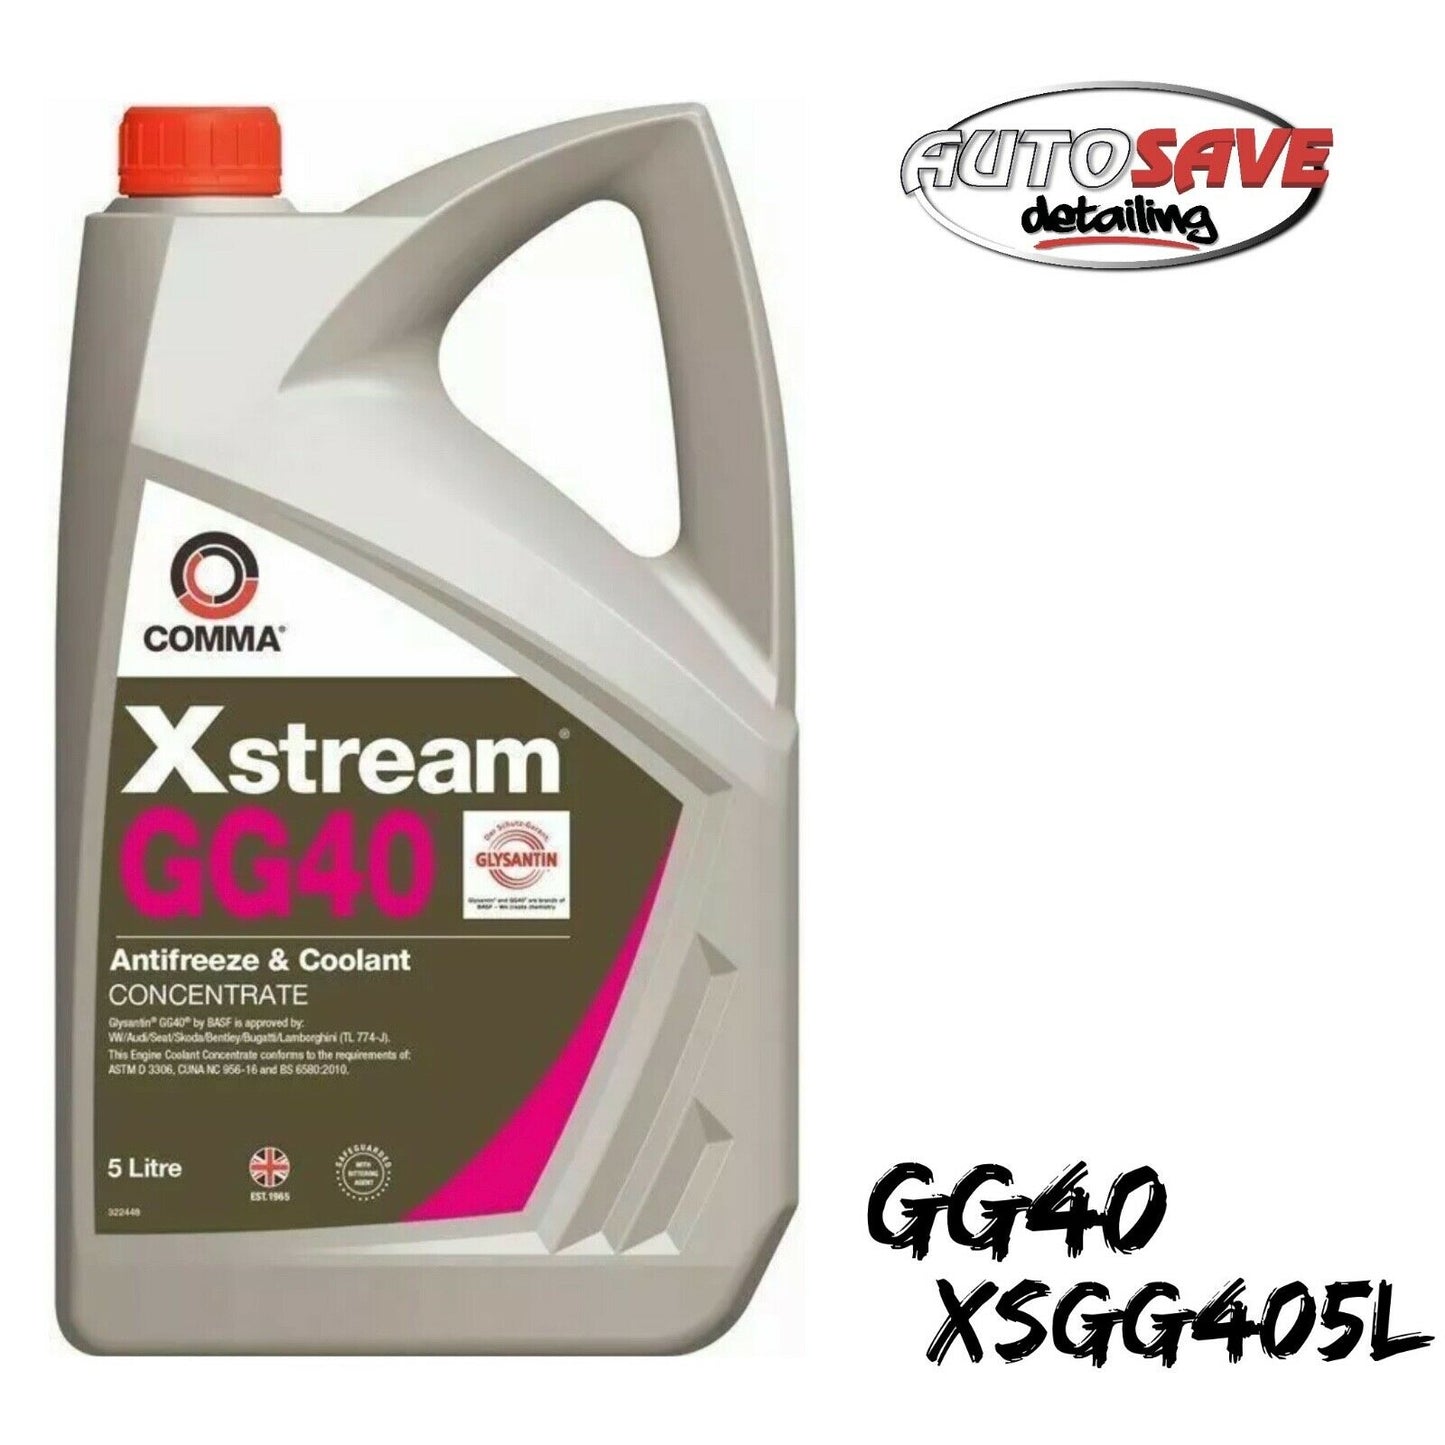 Comma Xstream GG40 Car Antifreeze & Coolant - Concentrate